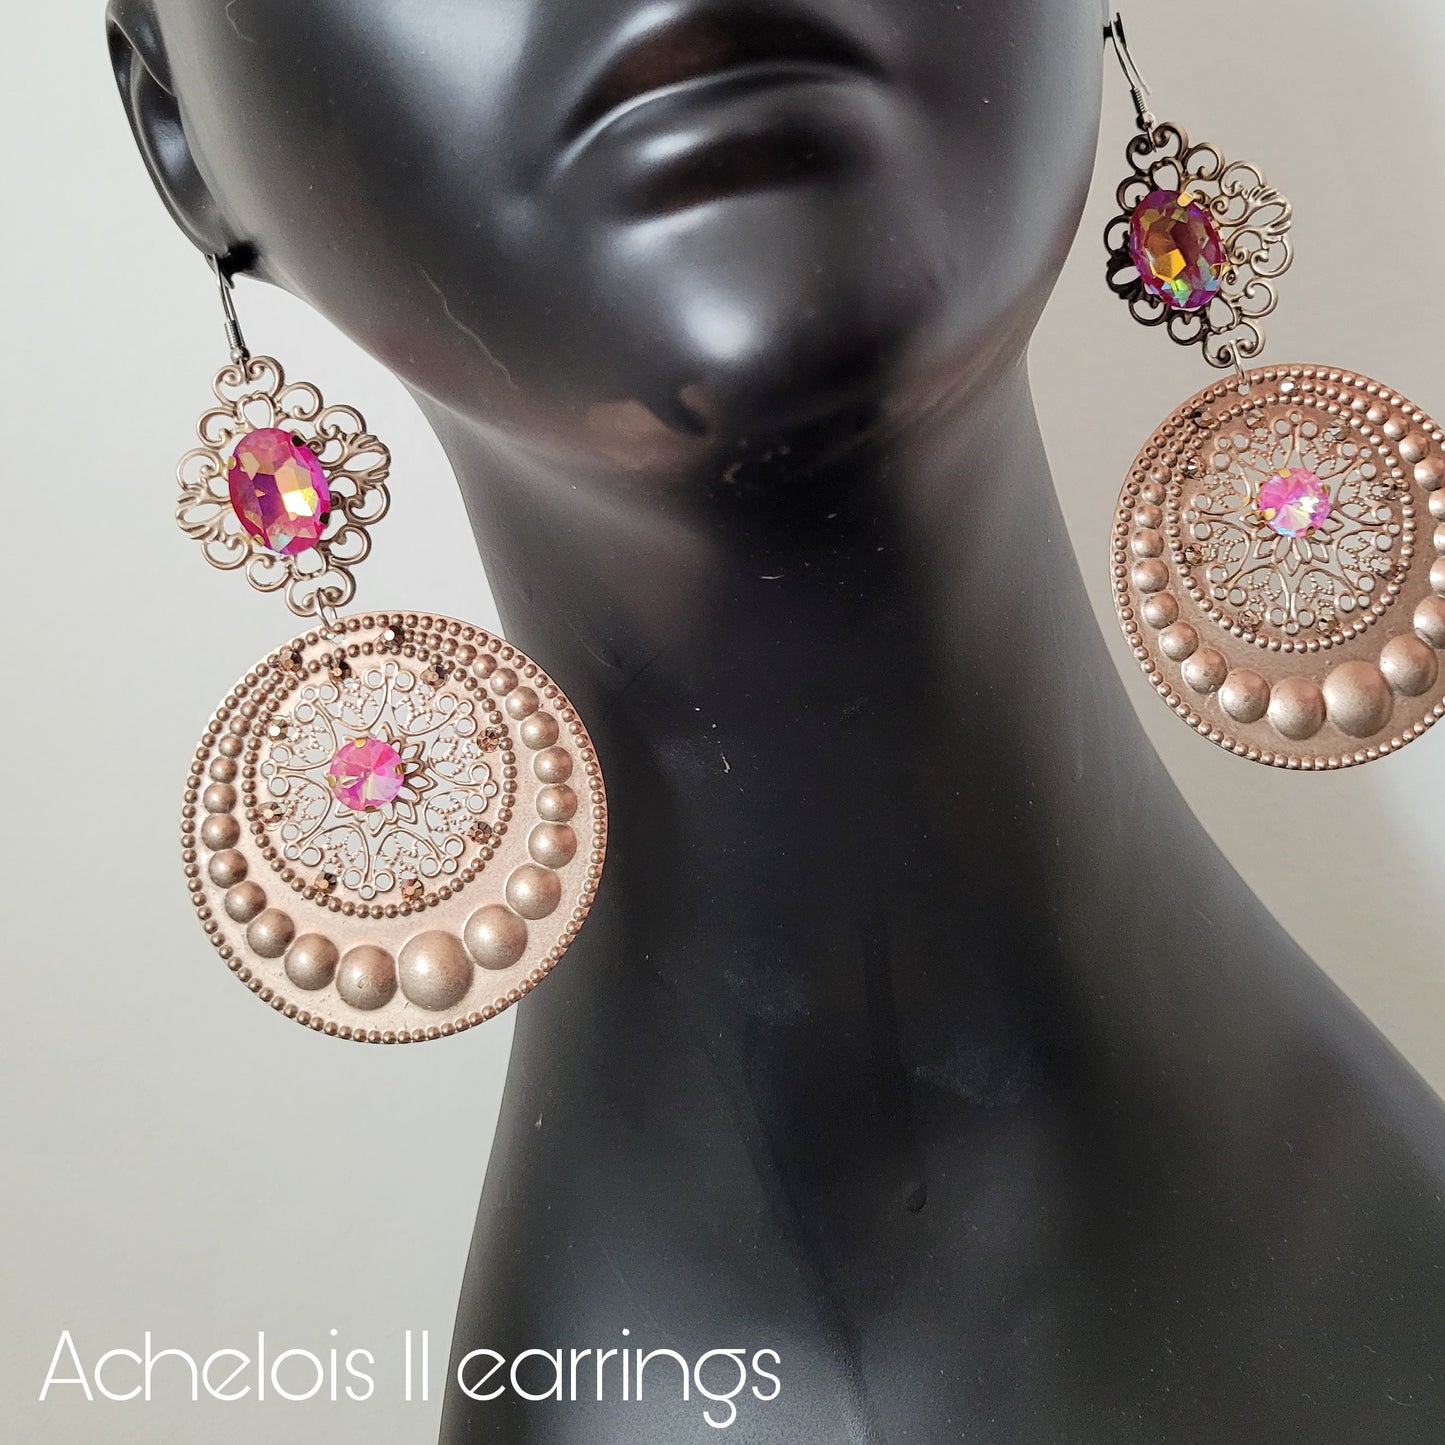 Deusa ex Machina collection: The Achelois earrings